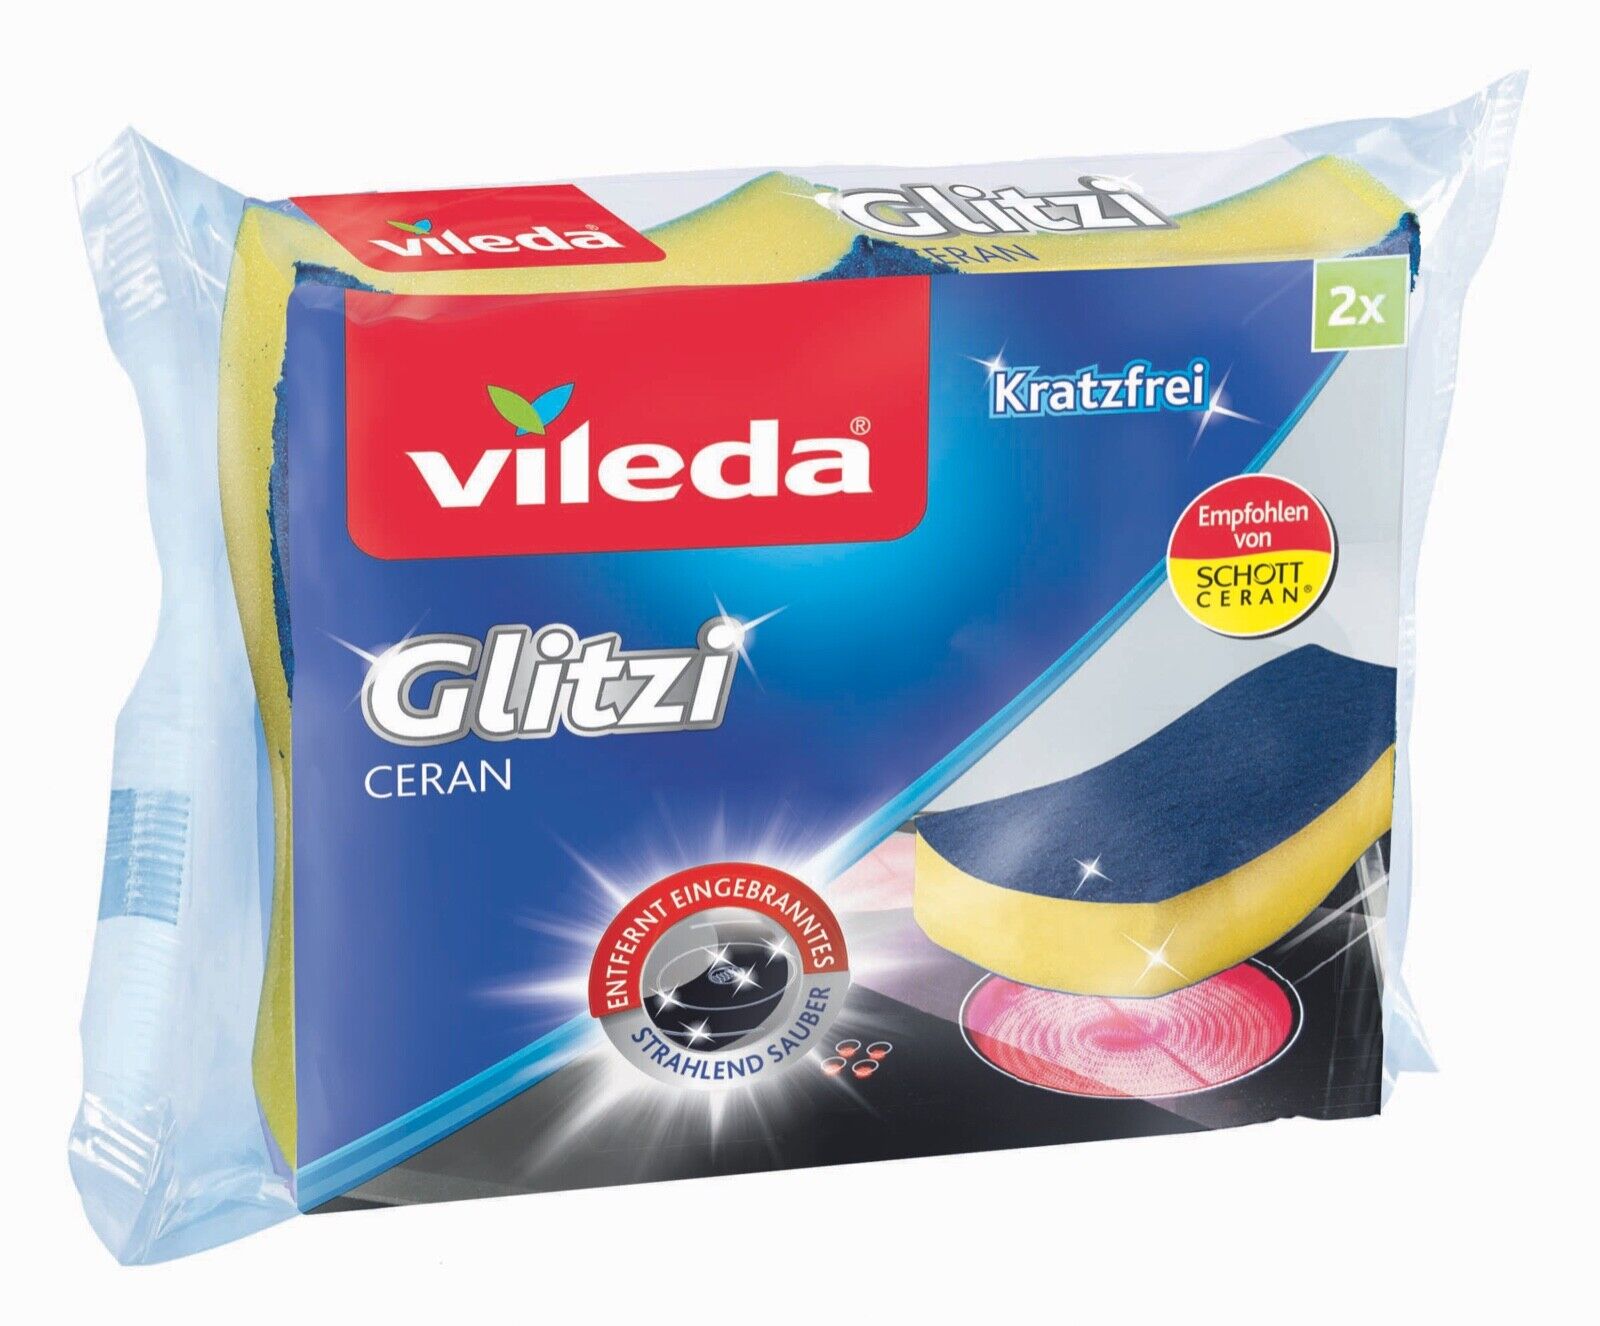 Das Bild zeigt den verpackten Vileda® Glitzi ceran Schwamm.